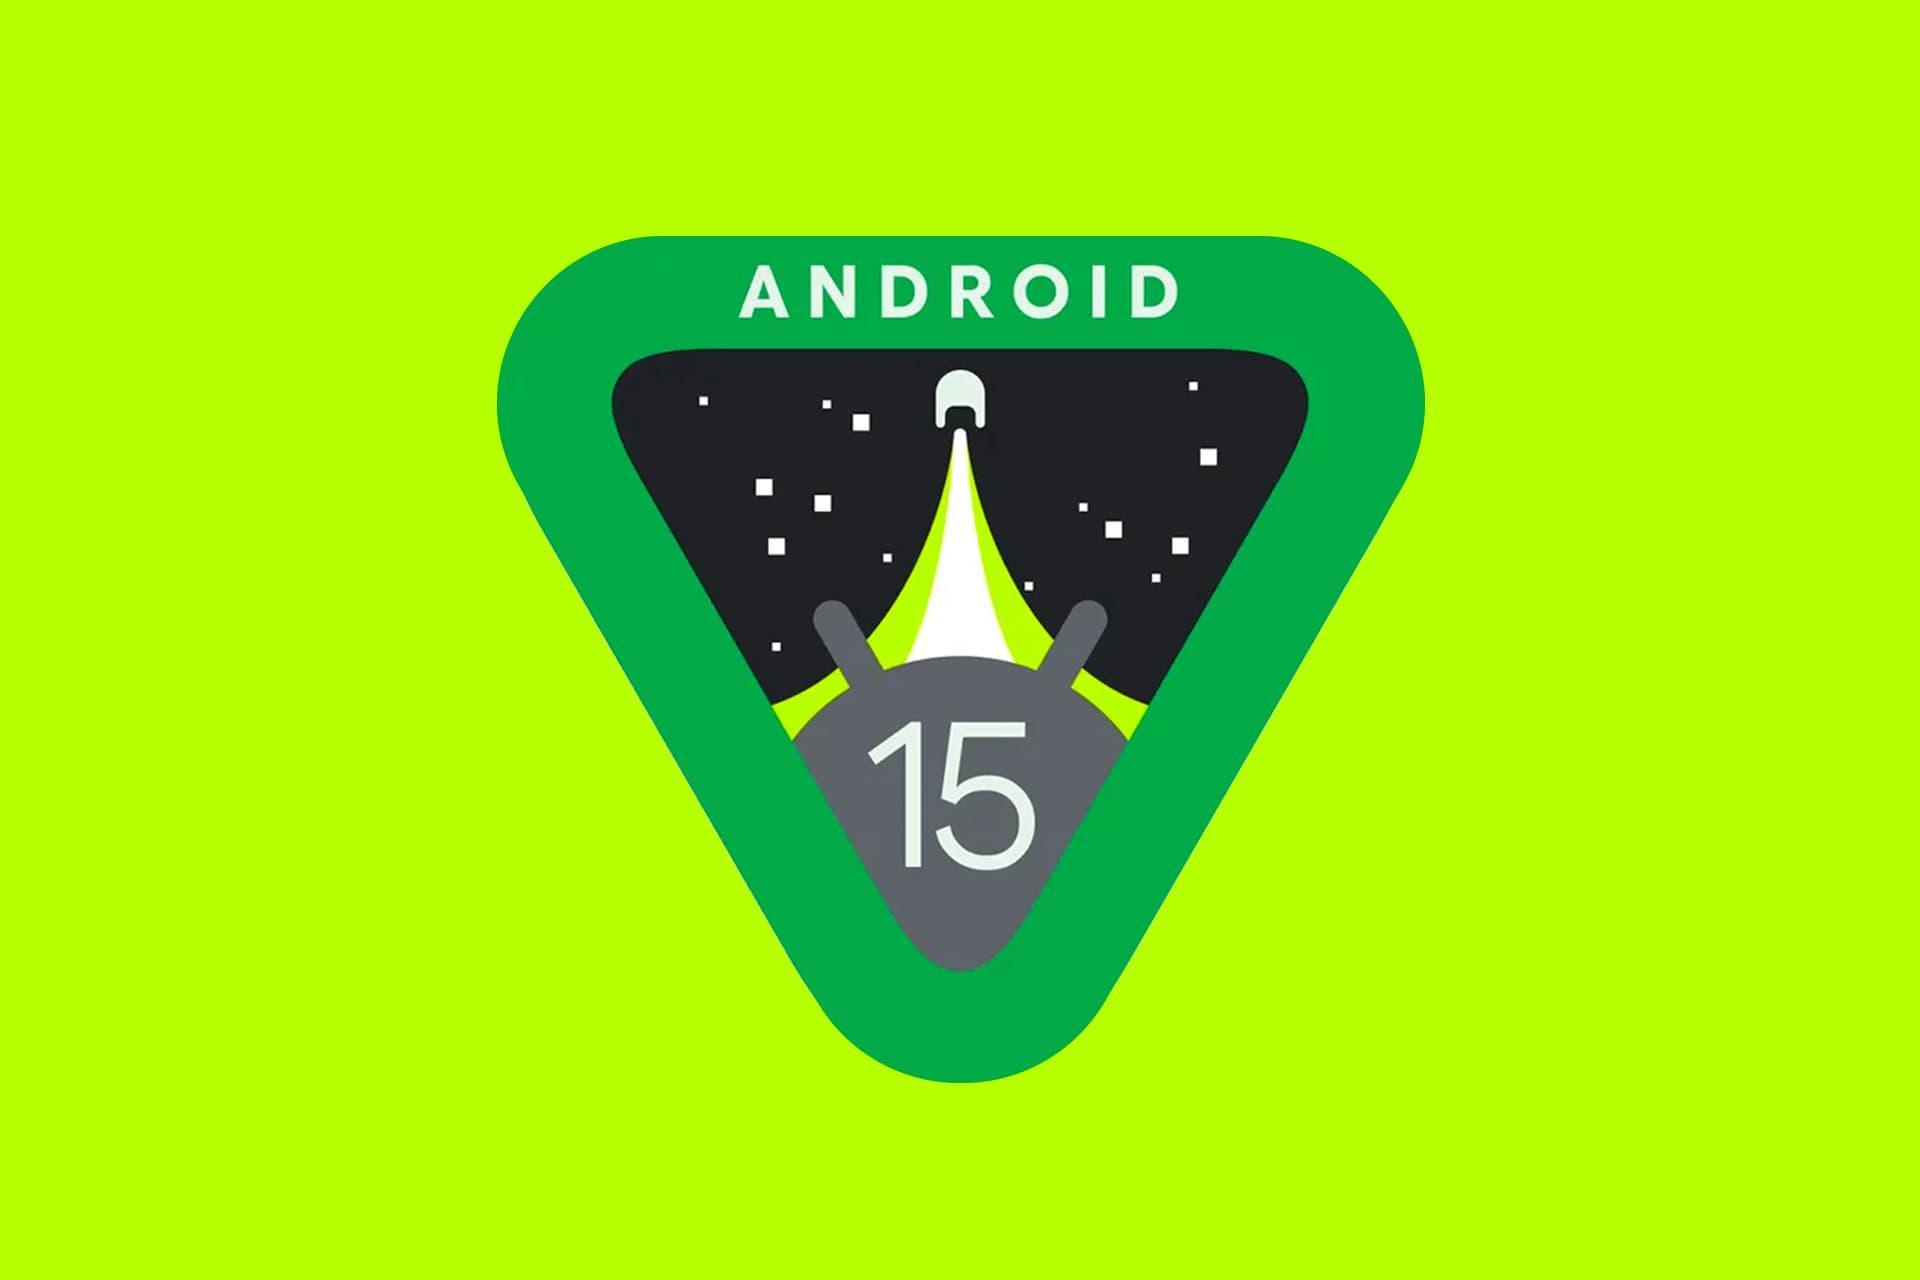 مرجع متخصصين ايران لوگو اندرويد ۱۵ گوگل / Android 15 پس زمينه سبز